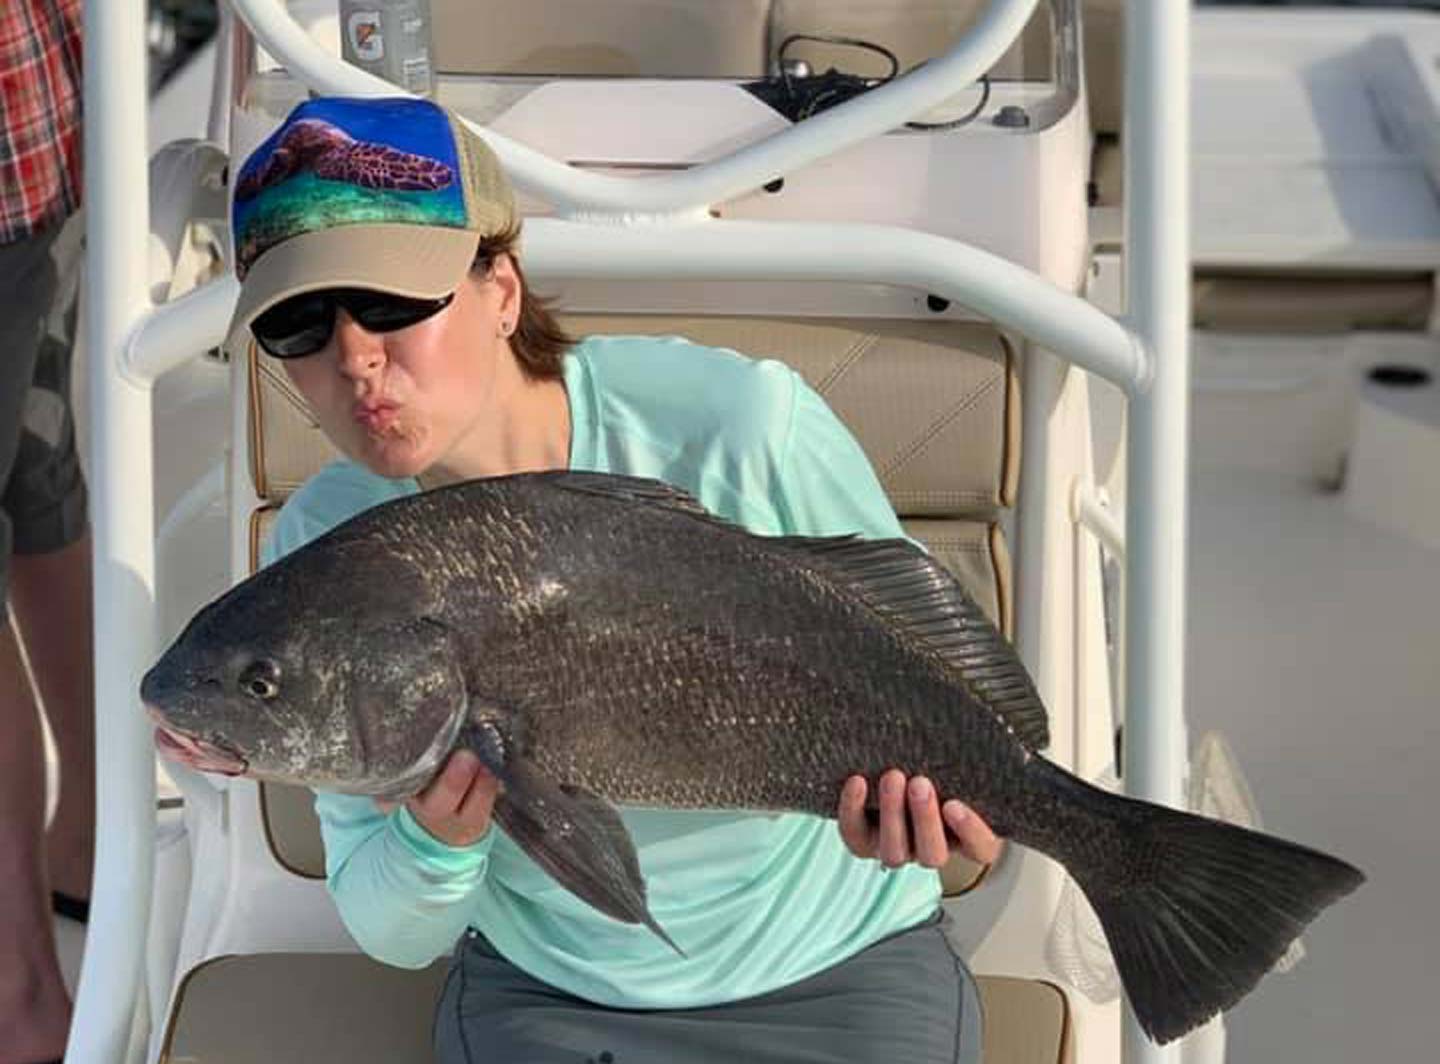 Woman caught fish on Daytona Beach Deep Sea Fishing trip